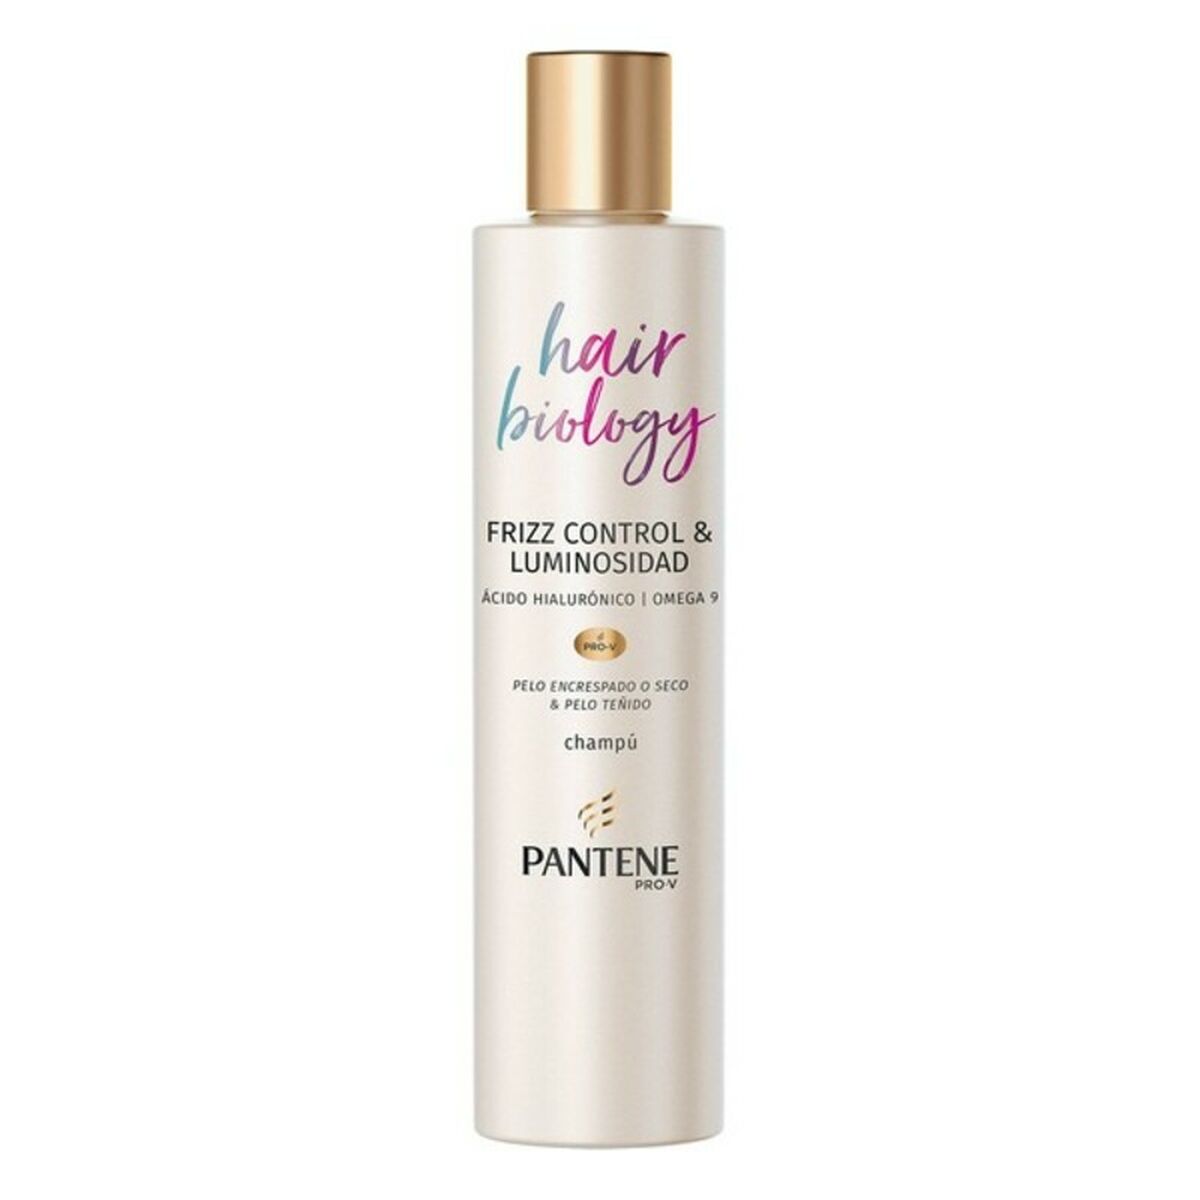 Shampoo Hair Biology Frizz & Luminosidad Pantene (250 ml)